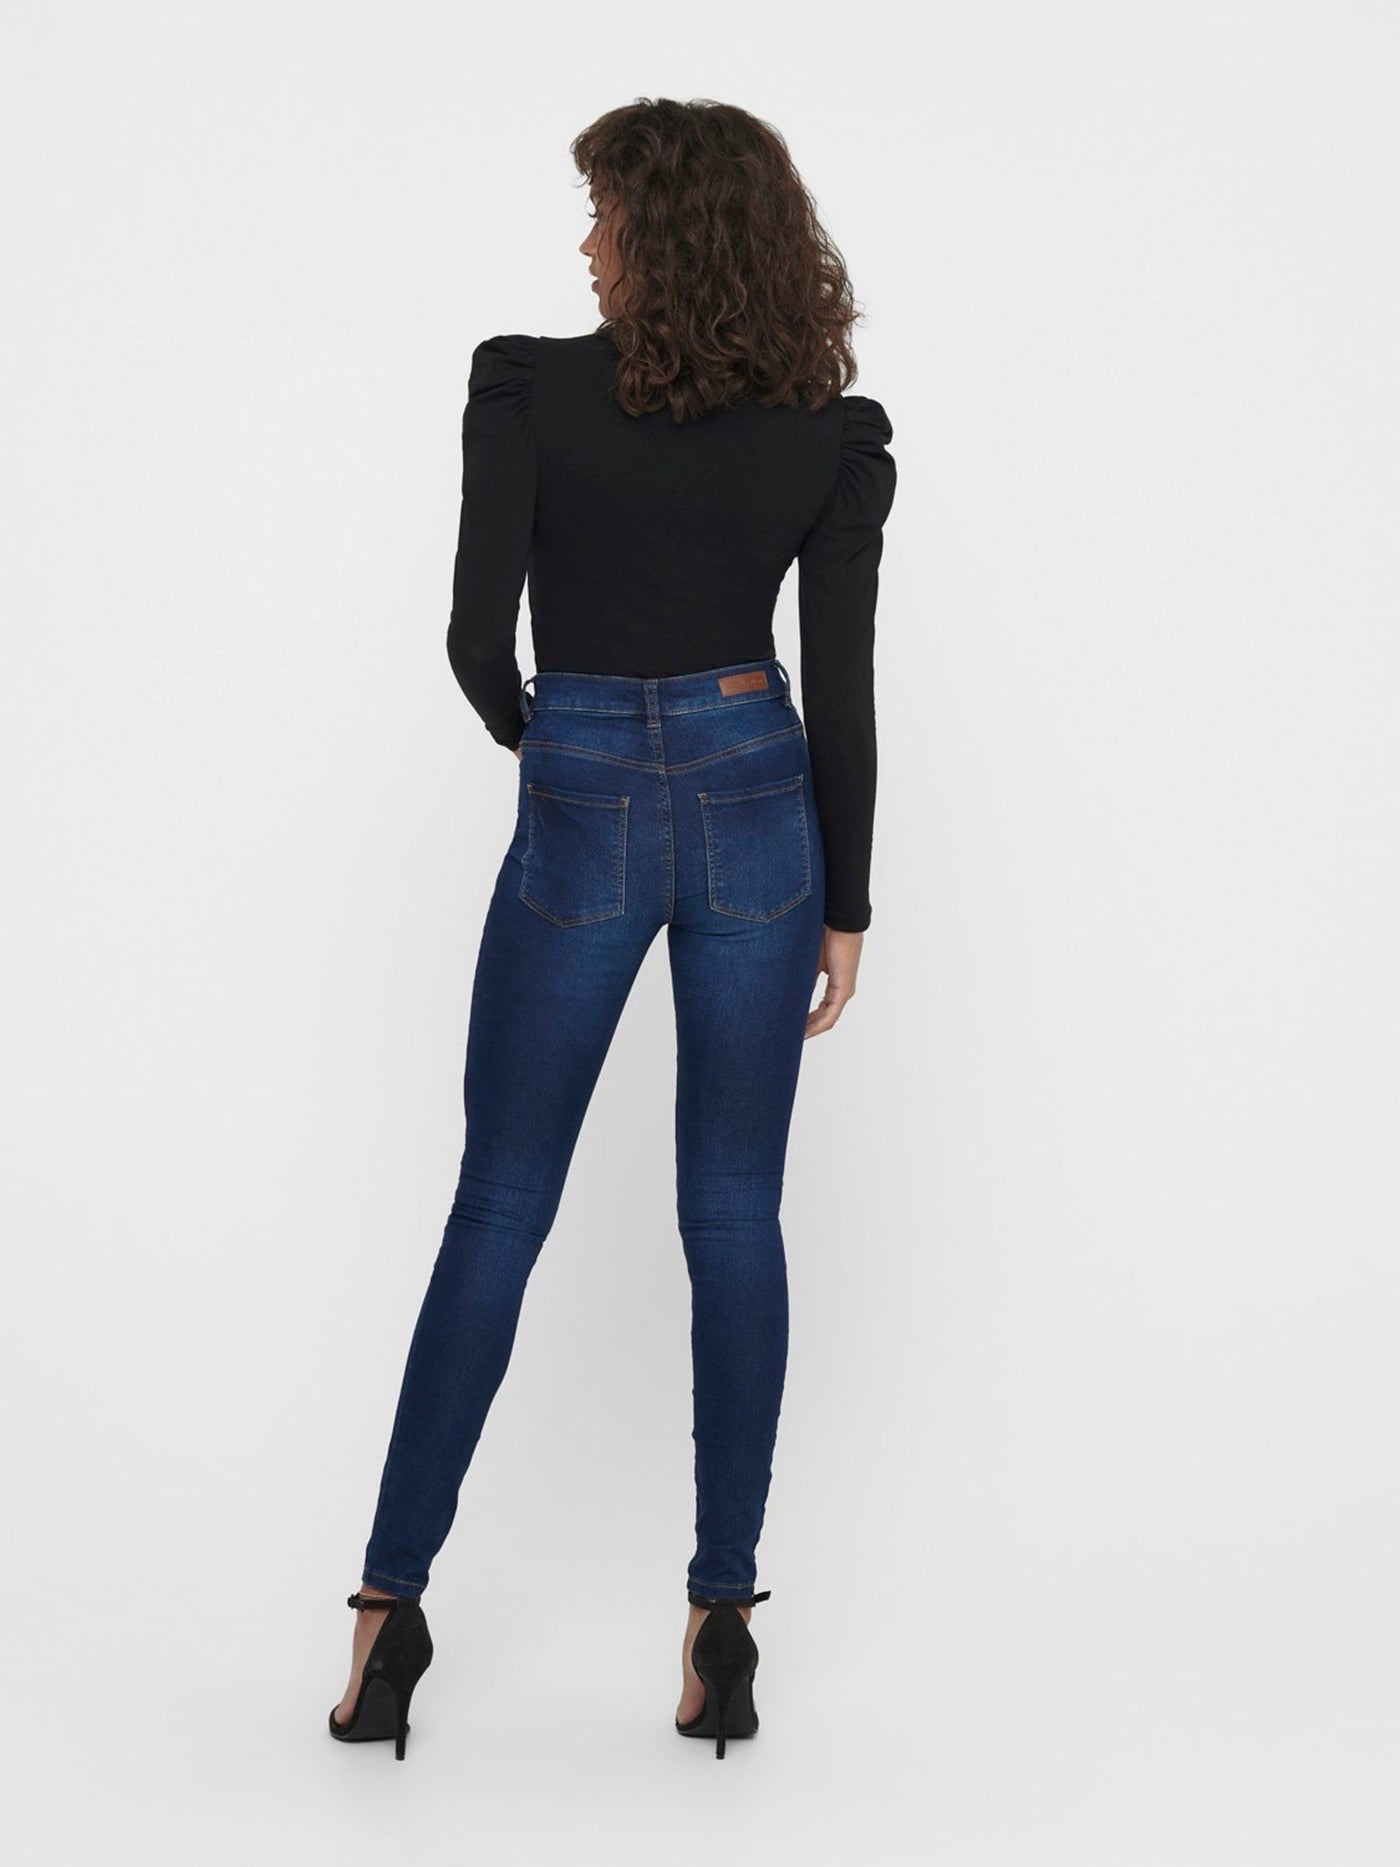 De Originale Performance Jeans - Blå denim (high waist) - Jacqueline de Yong - Blå 2